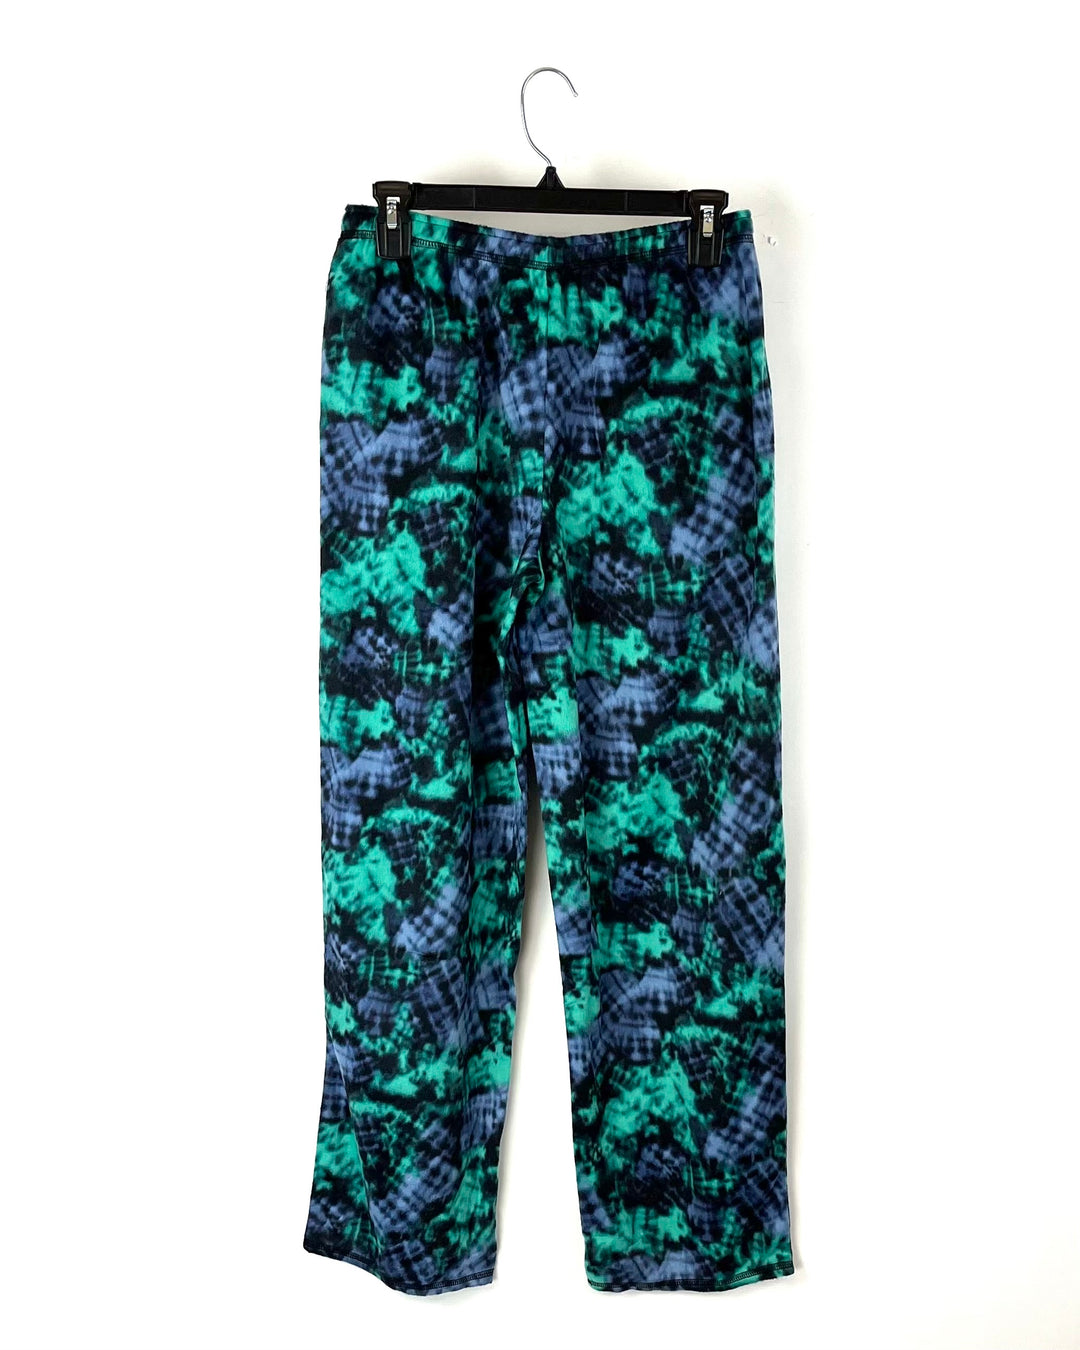 Multi Color Abstract Sleep Pants - Size 4/6